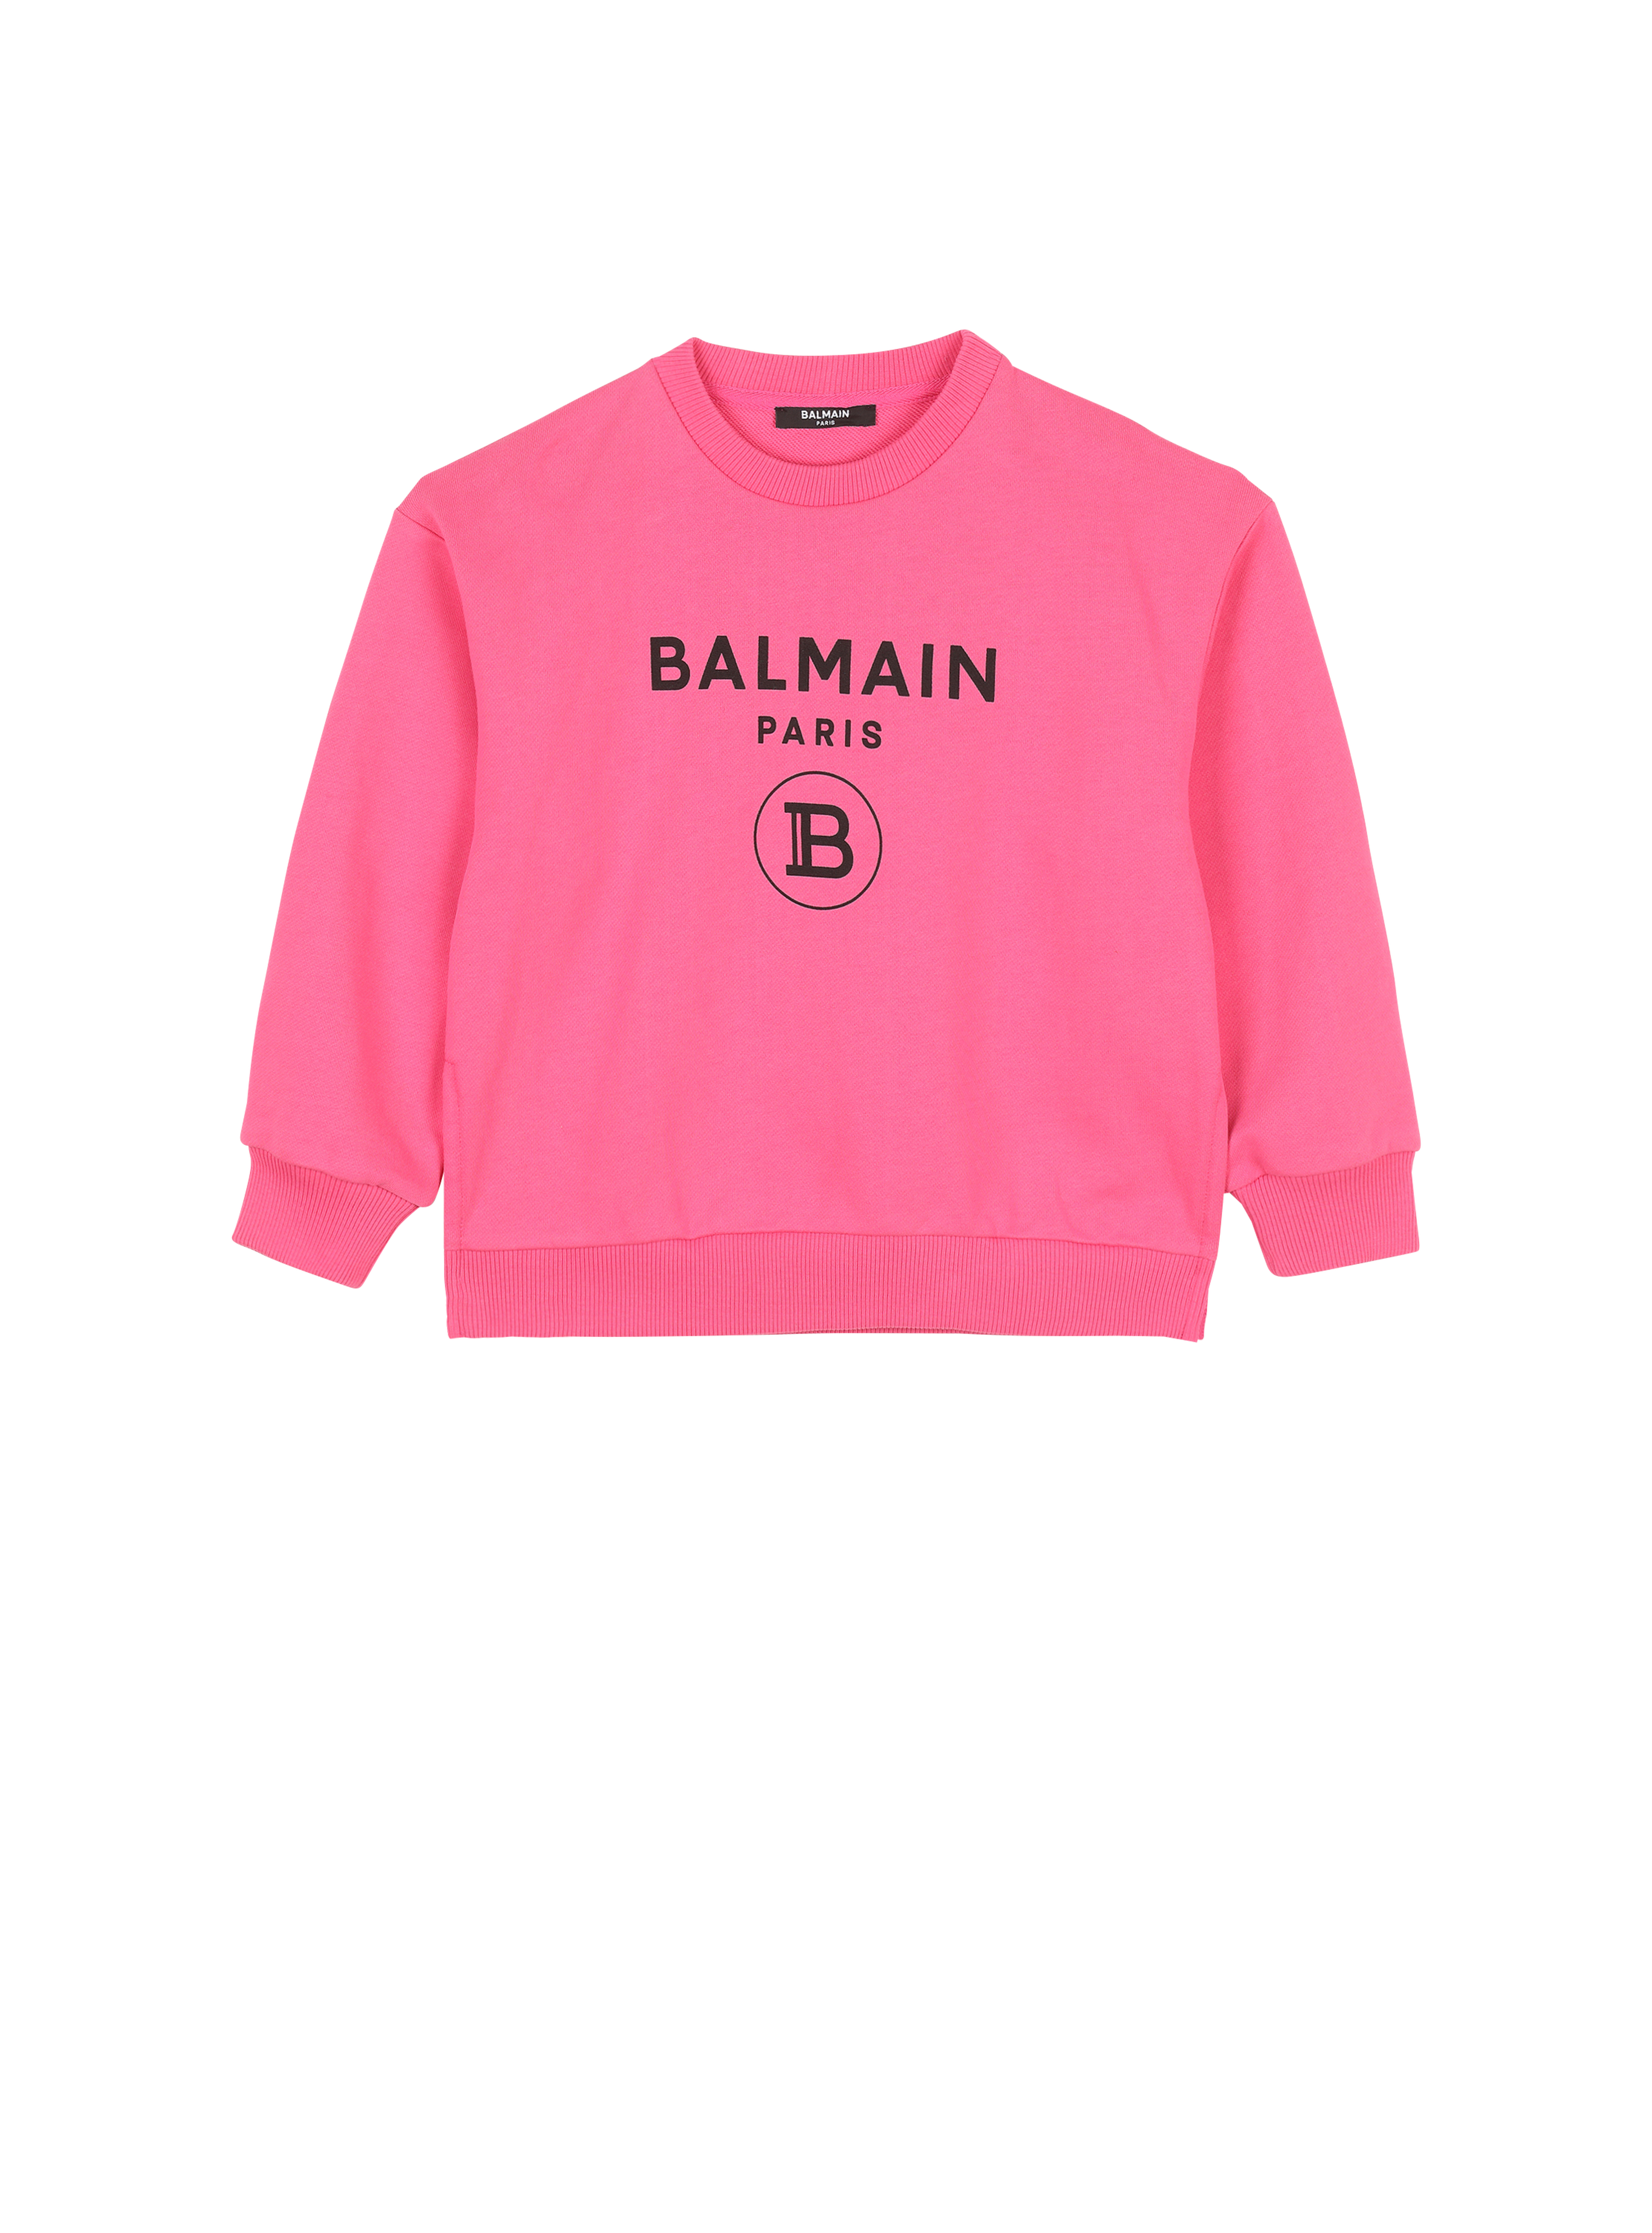 Cotton jumper with Balmain logo, pink